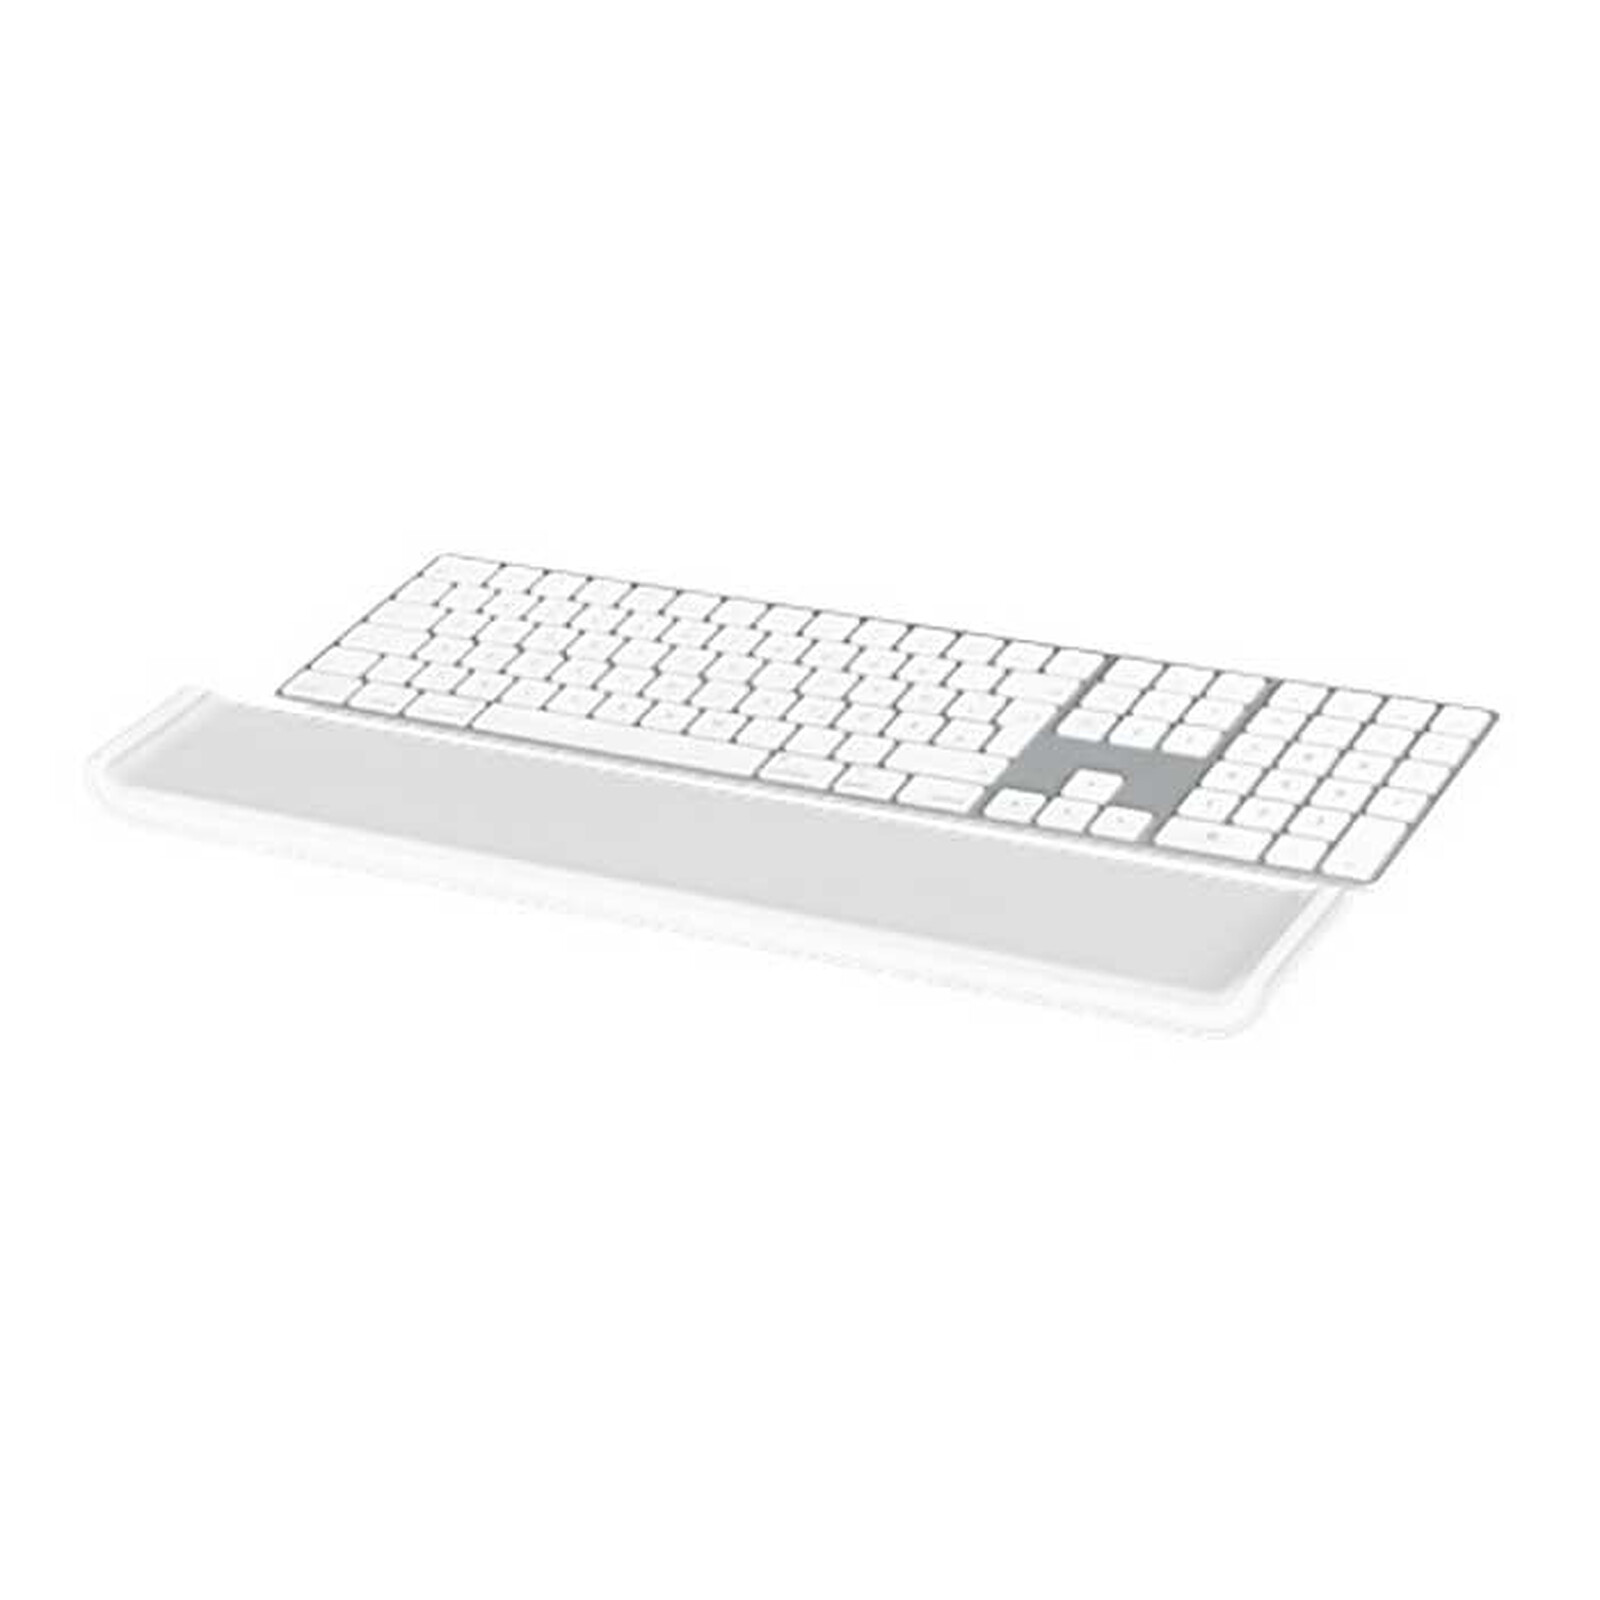 Leitz Ergo Cosy Keyboard Wrist Rest - Grey